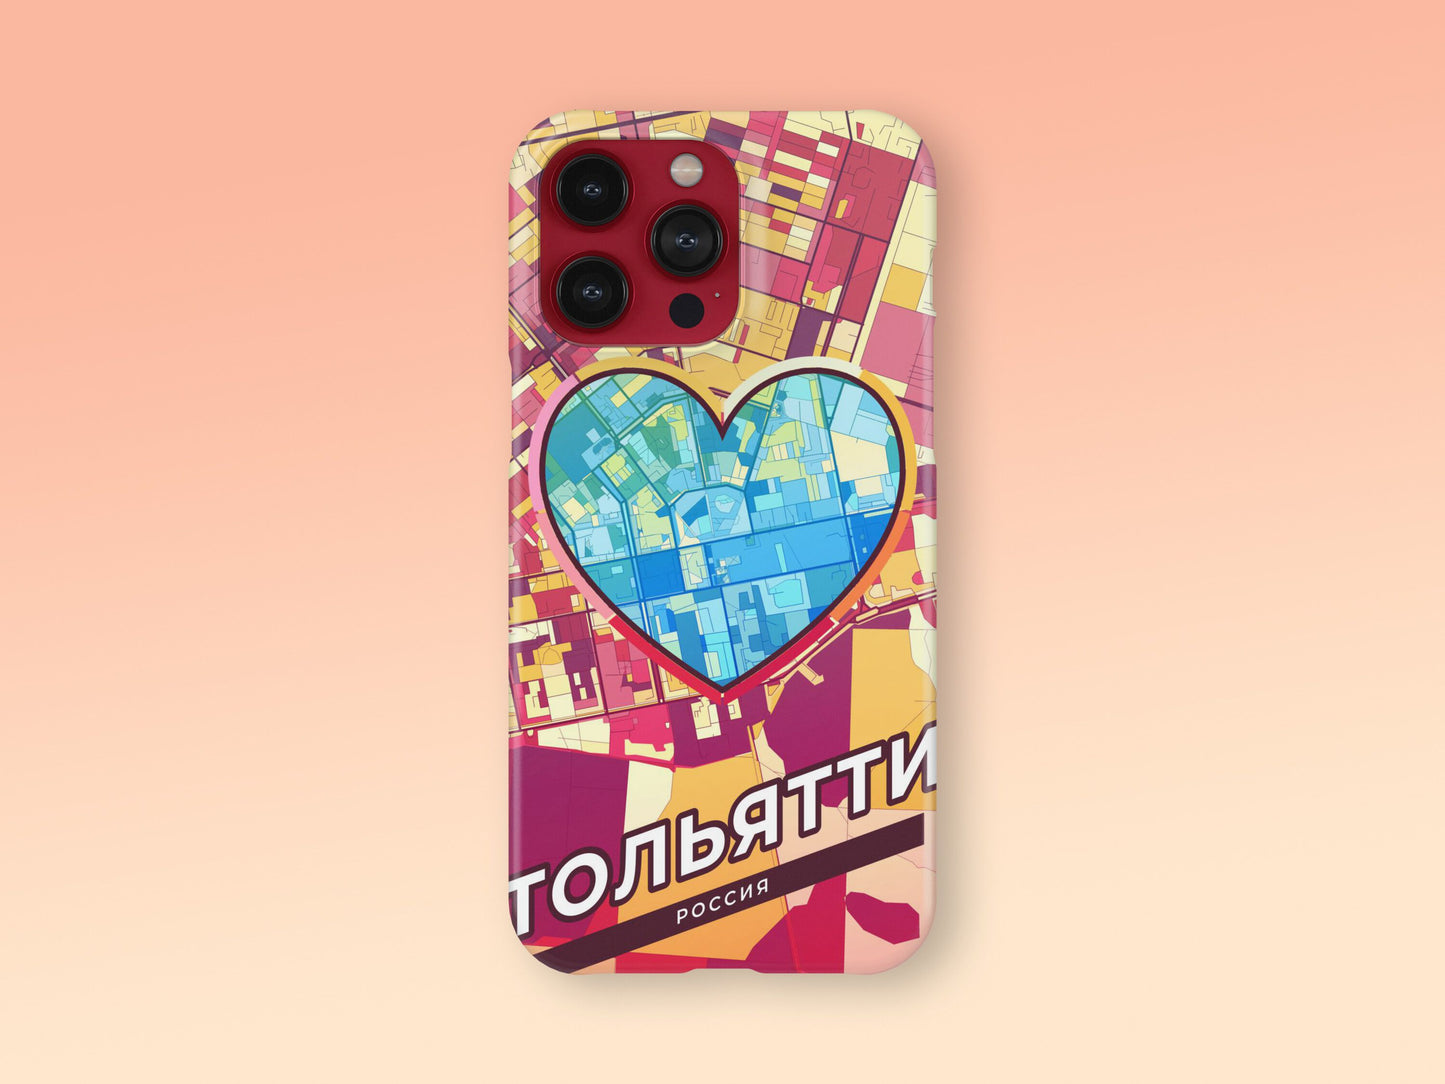 Tolyatti Russia slim phone case with colorful icon 2